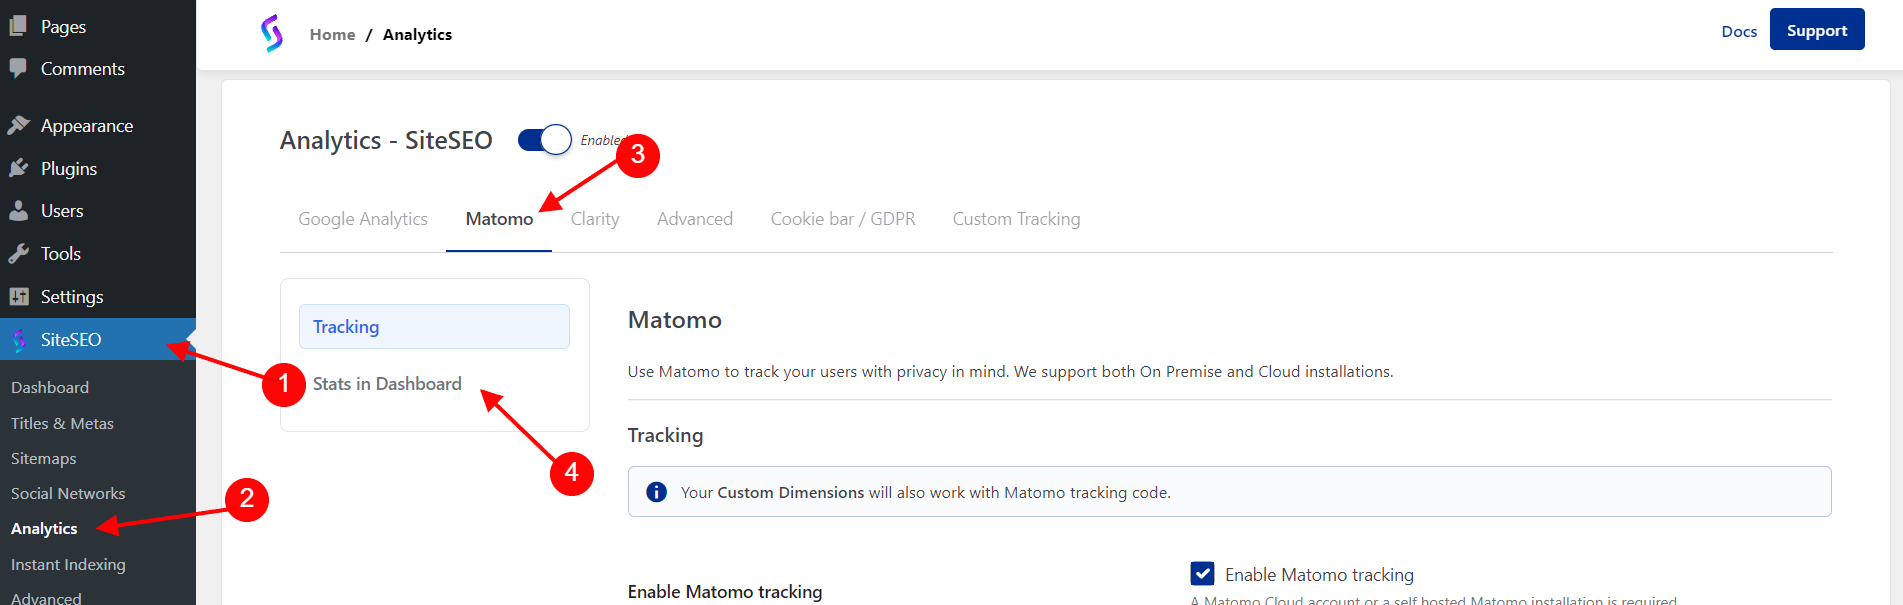 Matomo Stat in Dashboard section in SiteSEO